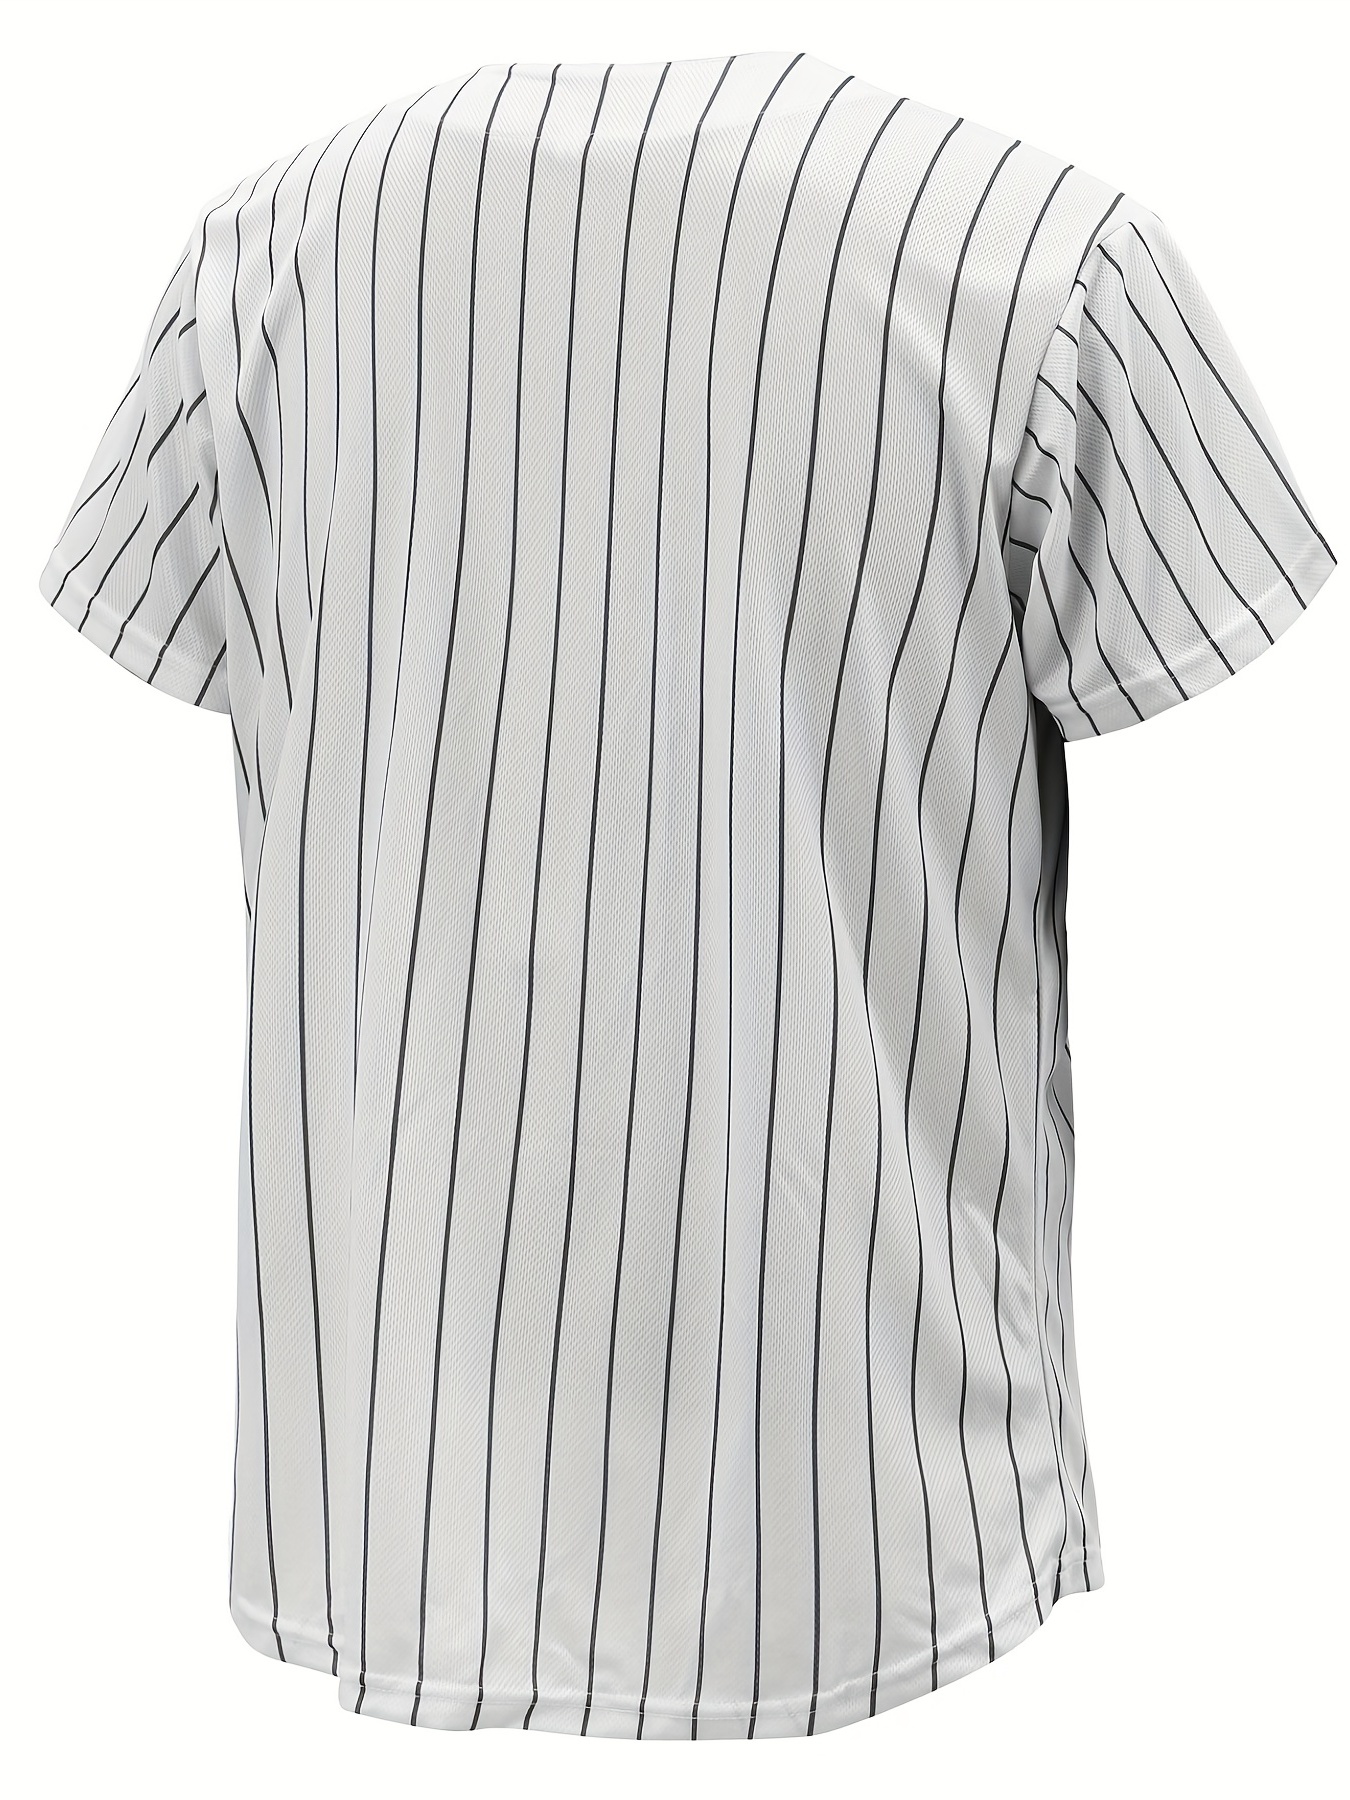 Mens Baseball JERSEY Polyester Plain TShirt Team Sport Button Fashion Tee  Casual